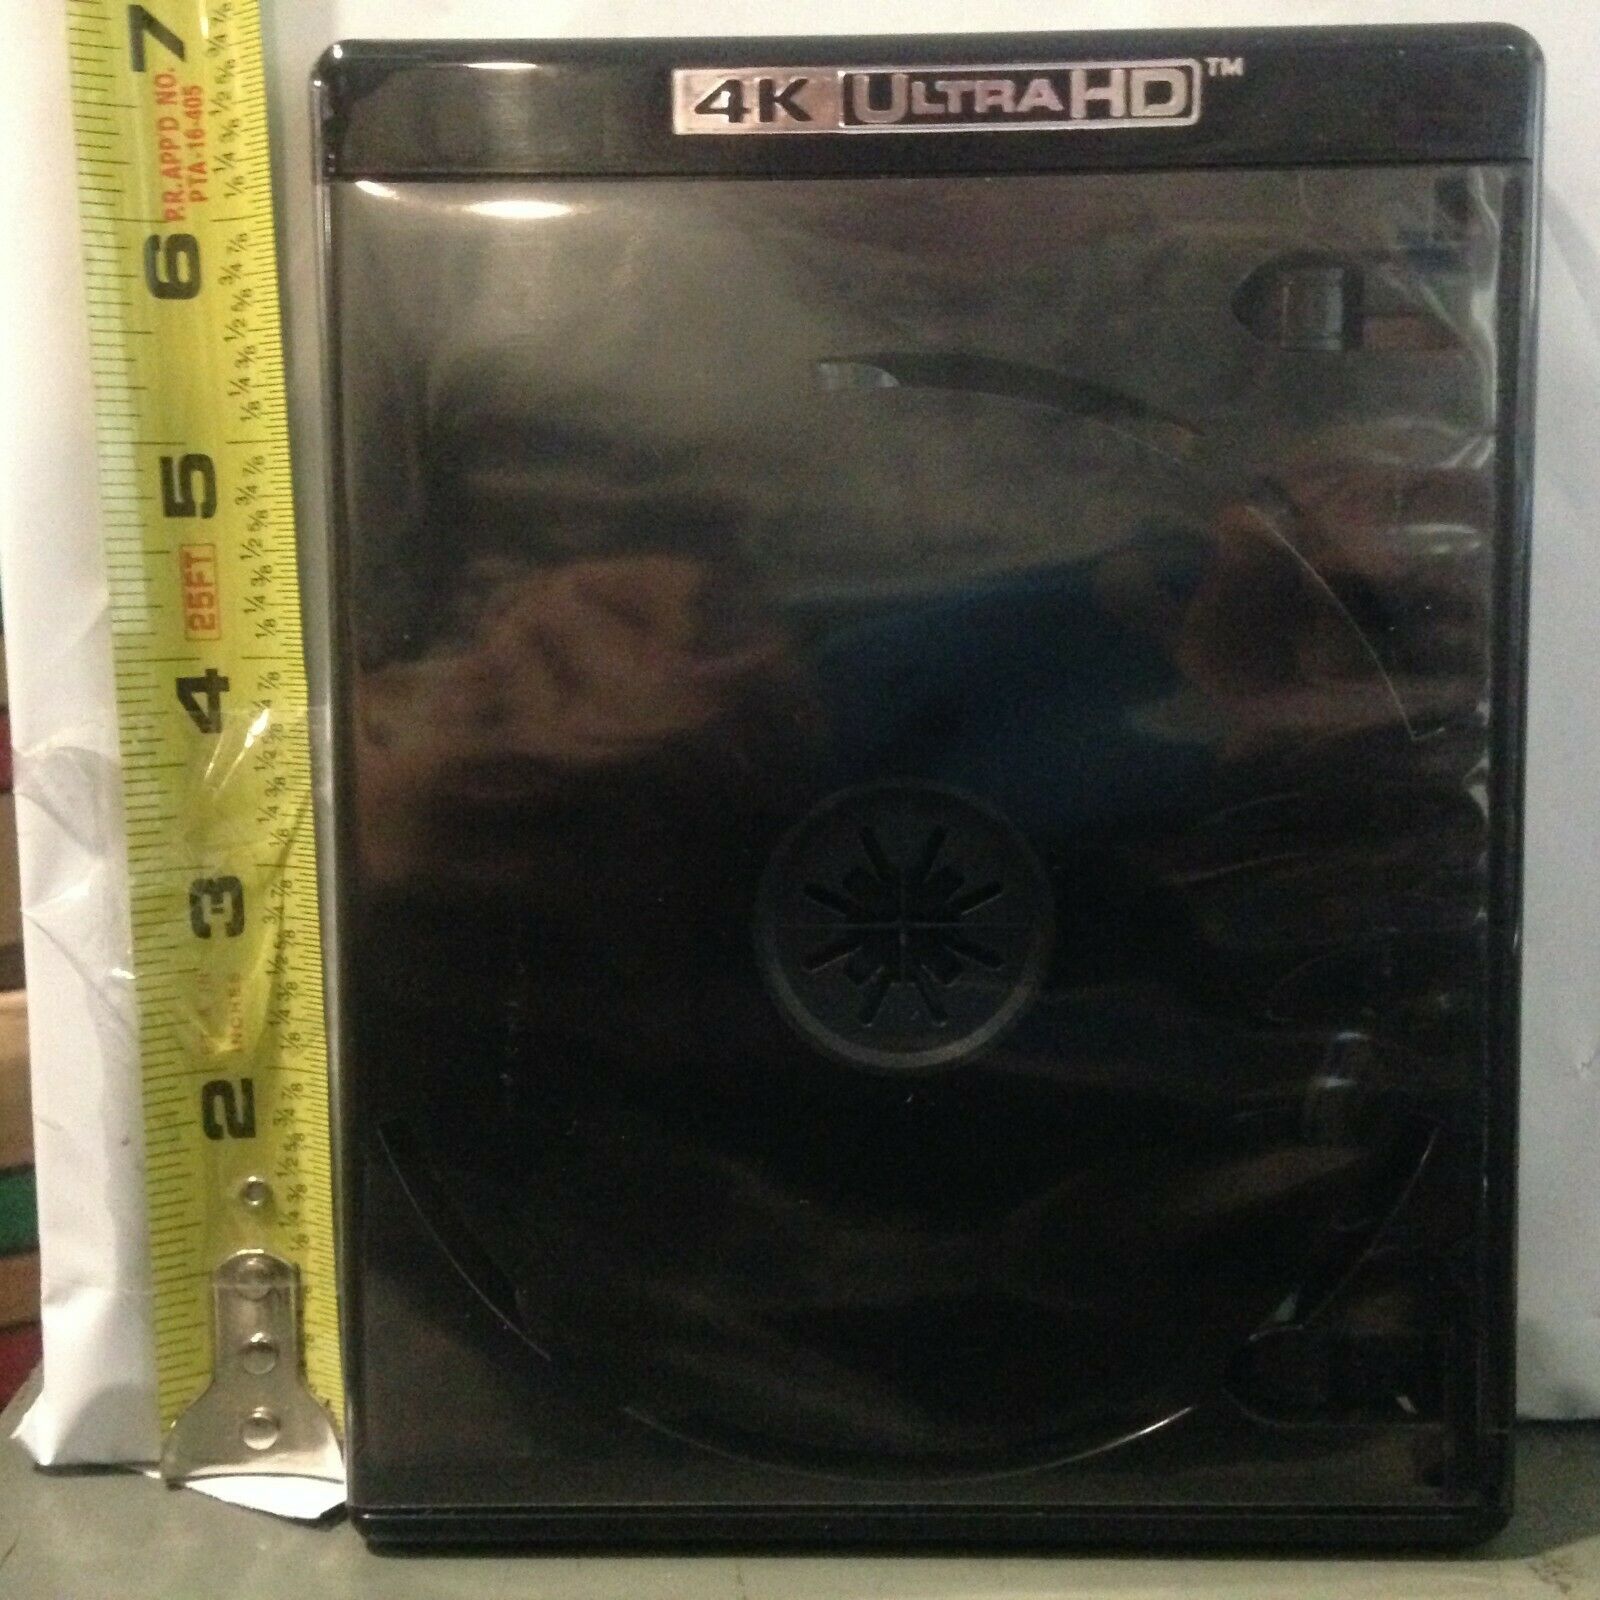 1 Brand New Premium 4k Ultra Hd Double (two) 2 Disc Media Case, W/emblem, 12.5mm